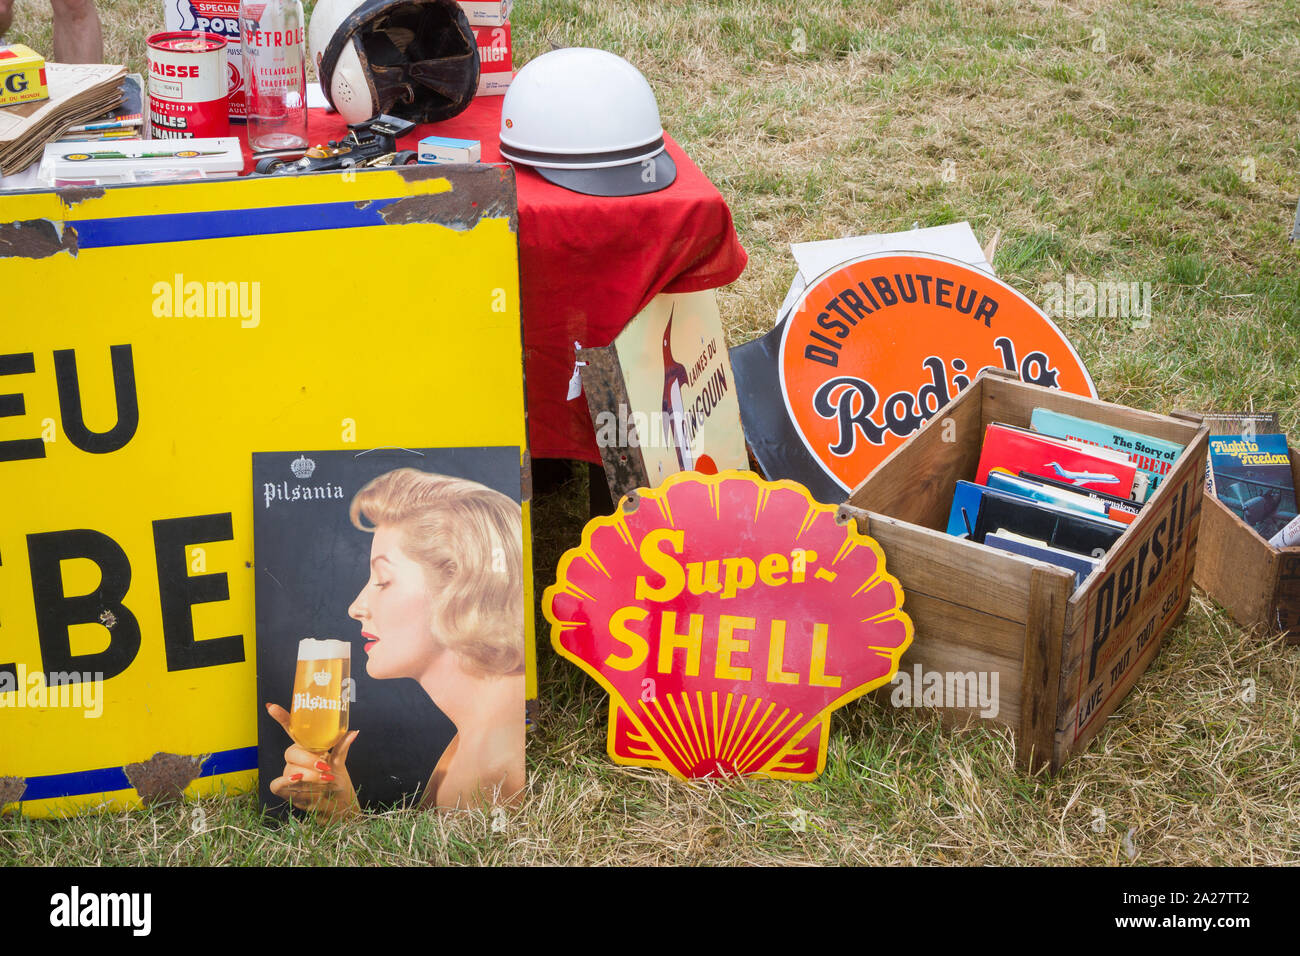 A Super Shell enamel sign for sale amongst classic car automobilia Stock Photo